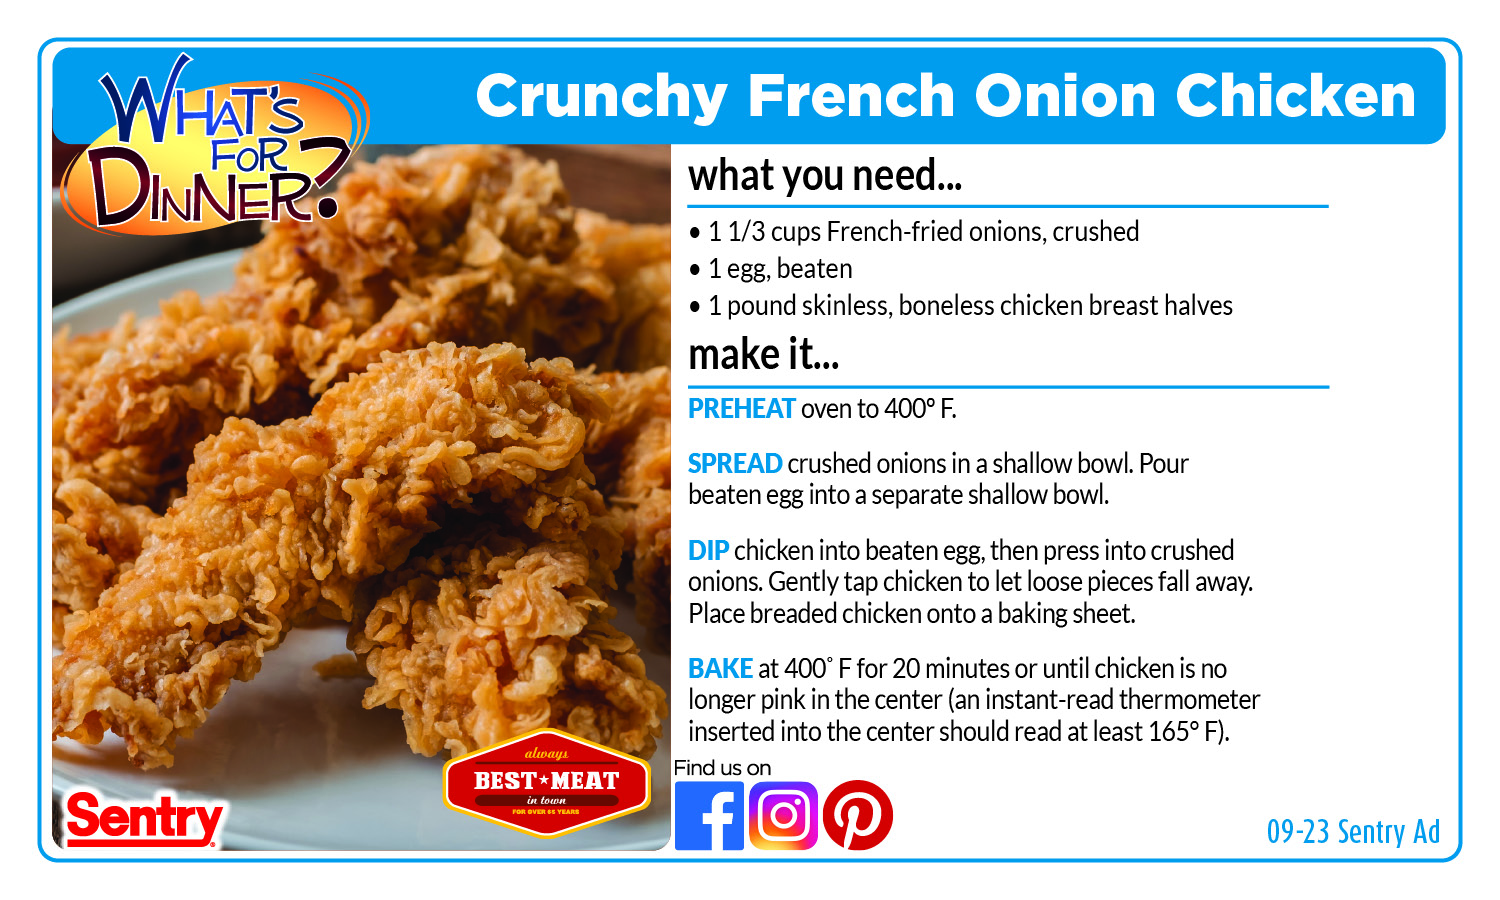 Crunchy French Onion Chicken Recipe Card